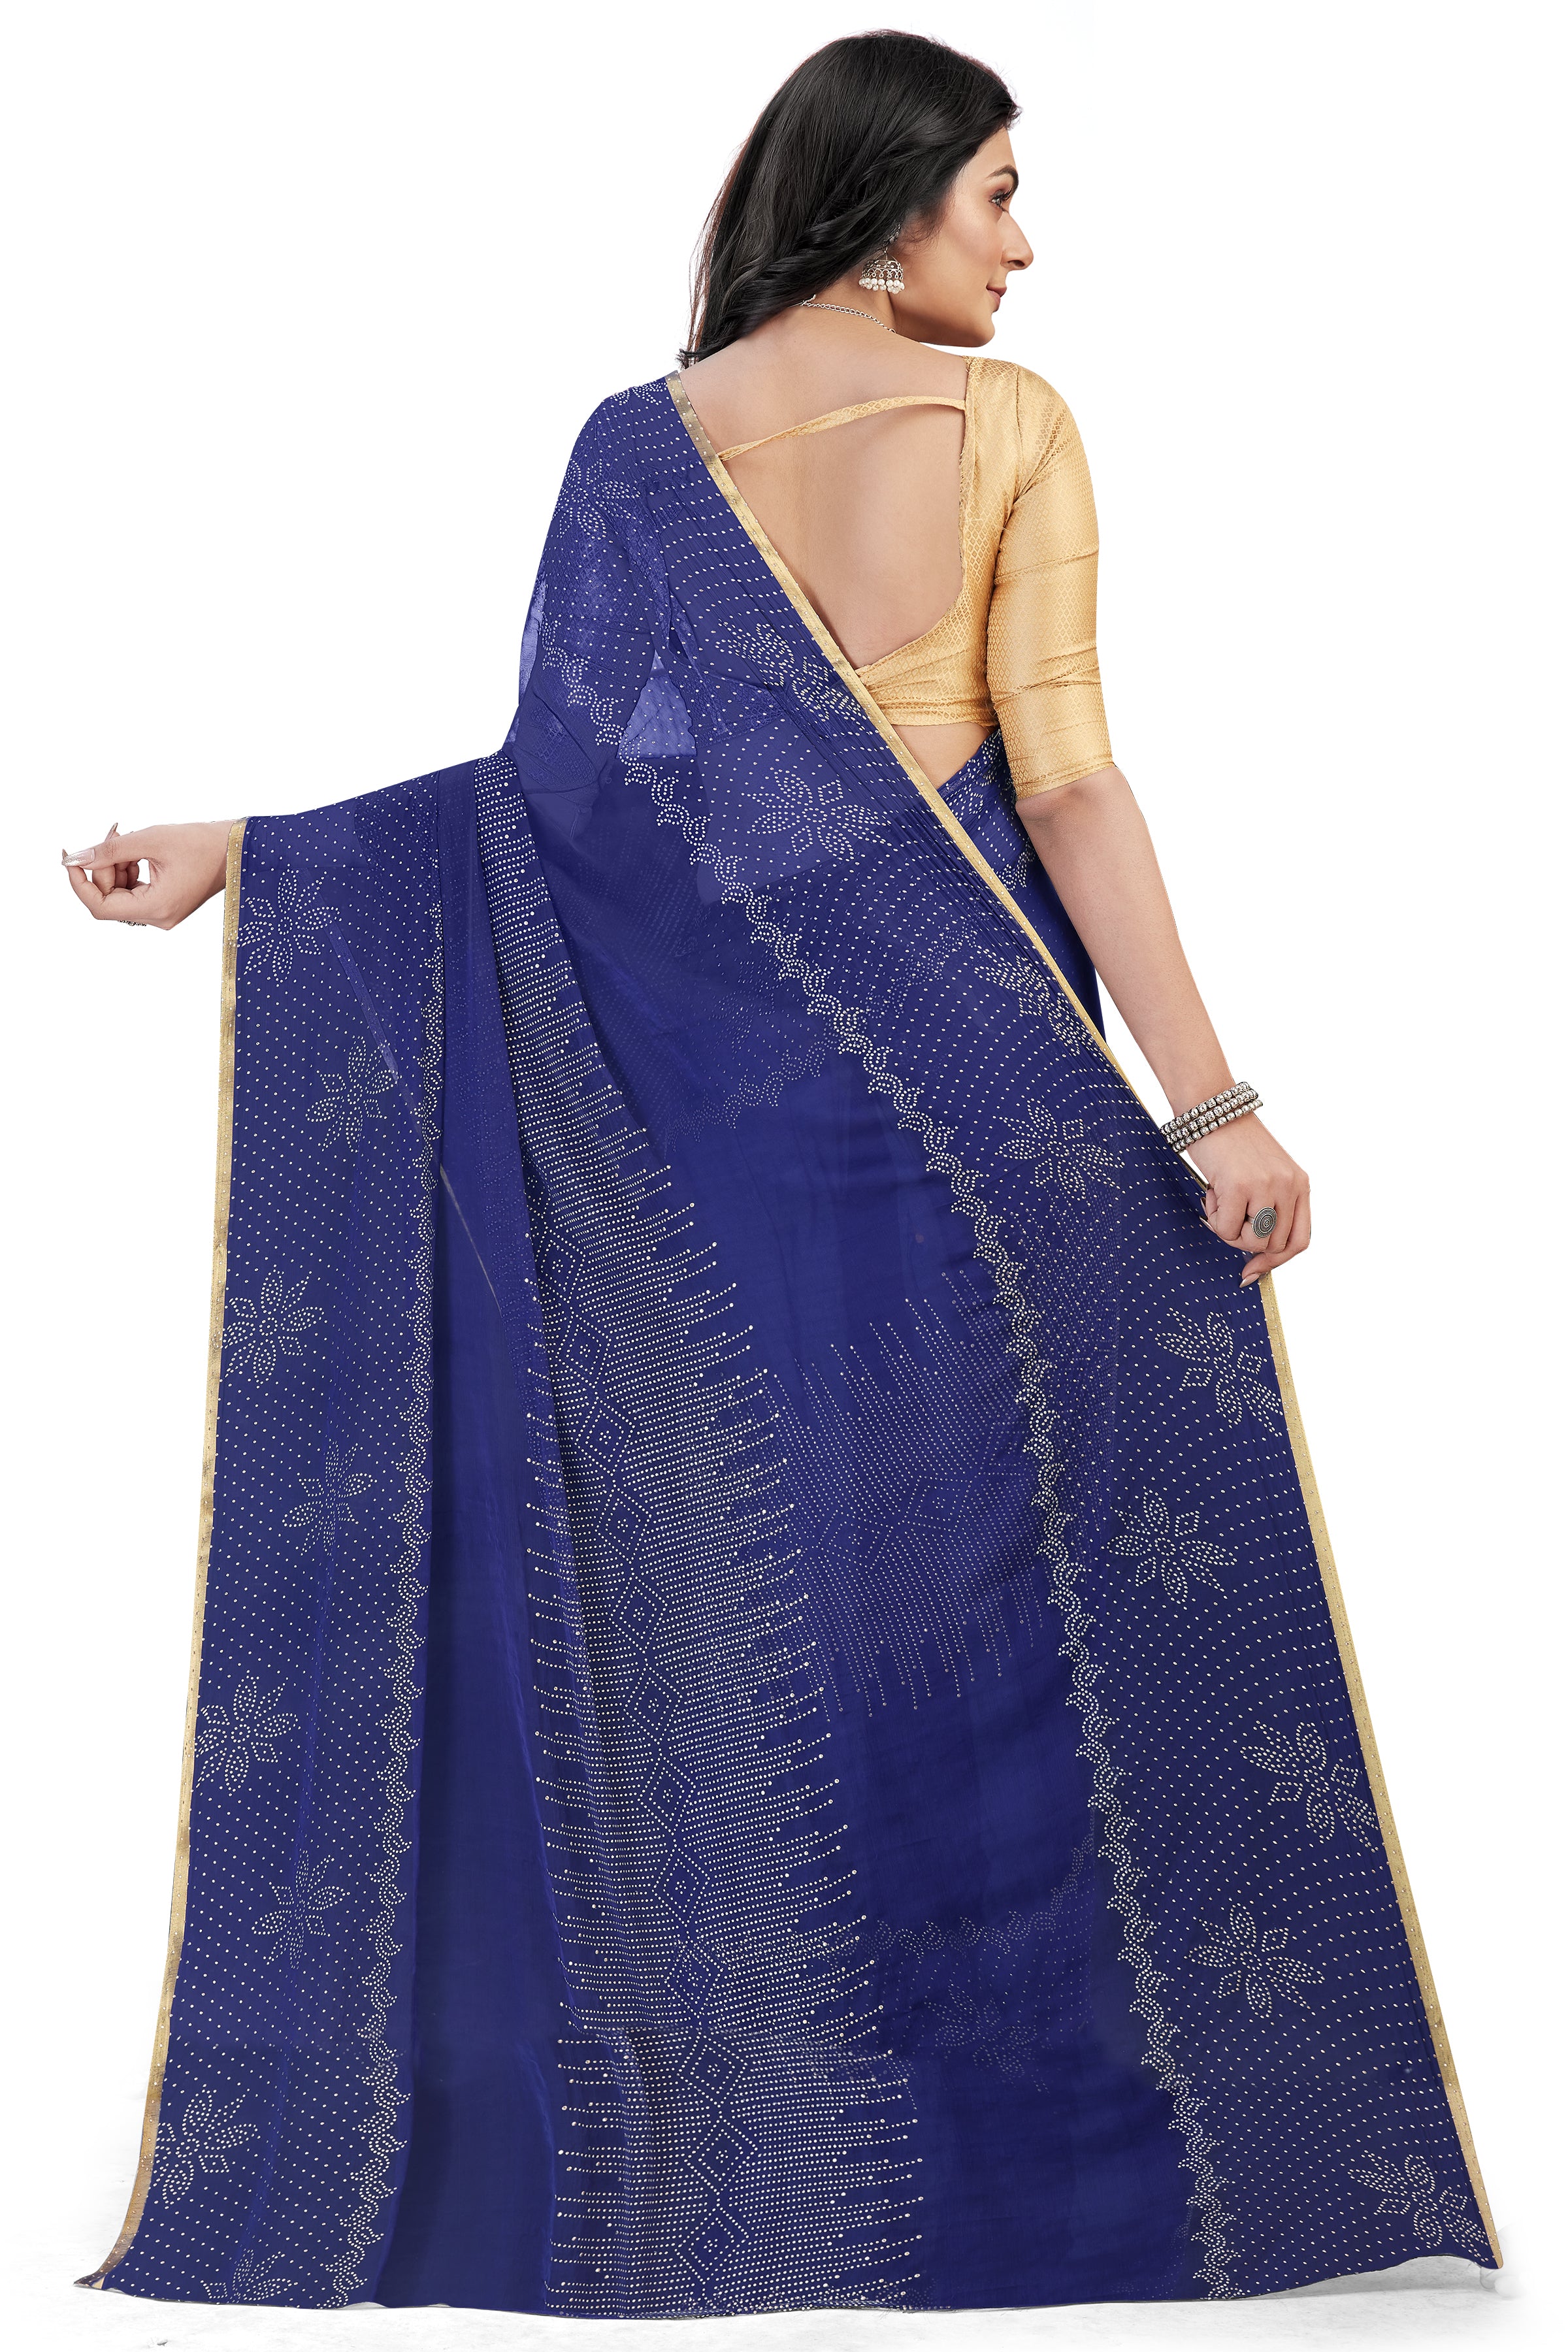 Women's Bandhani Daily Wear Chiffon Sari With Blouse Piece (Navy Blue) - NIMIDHYA